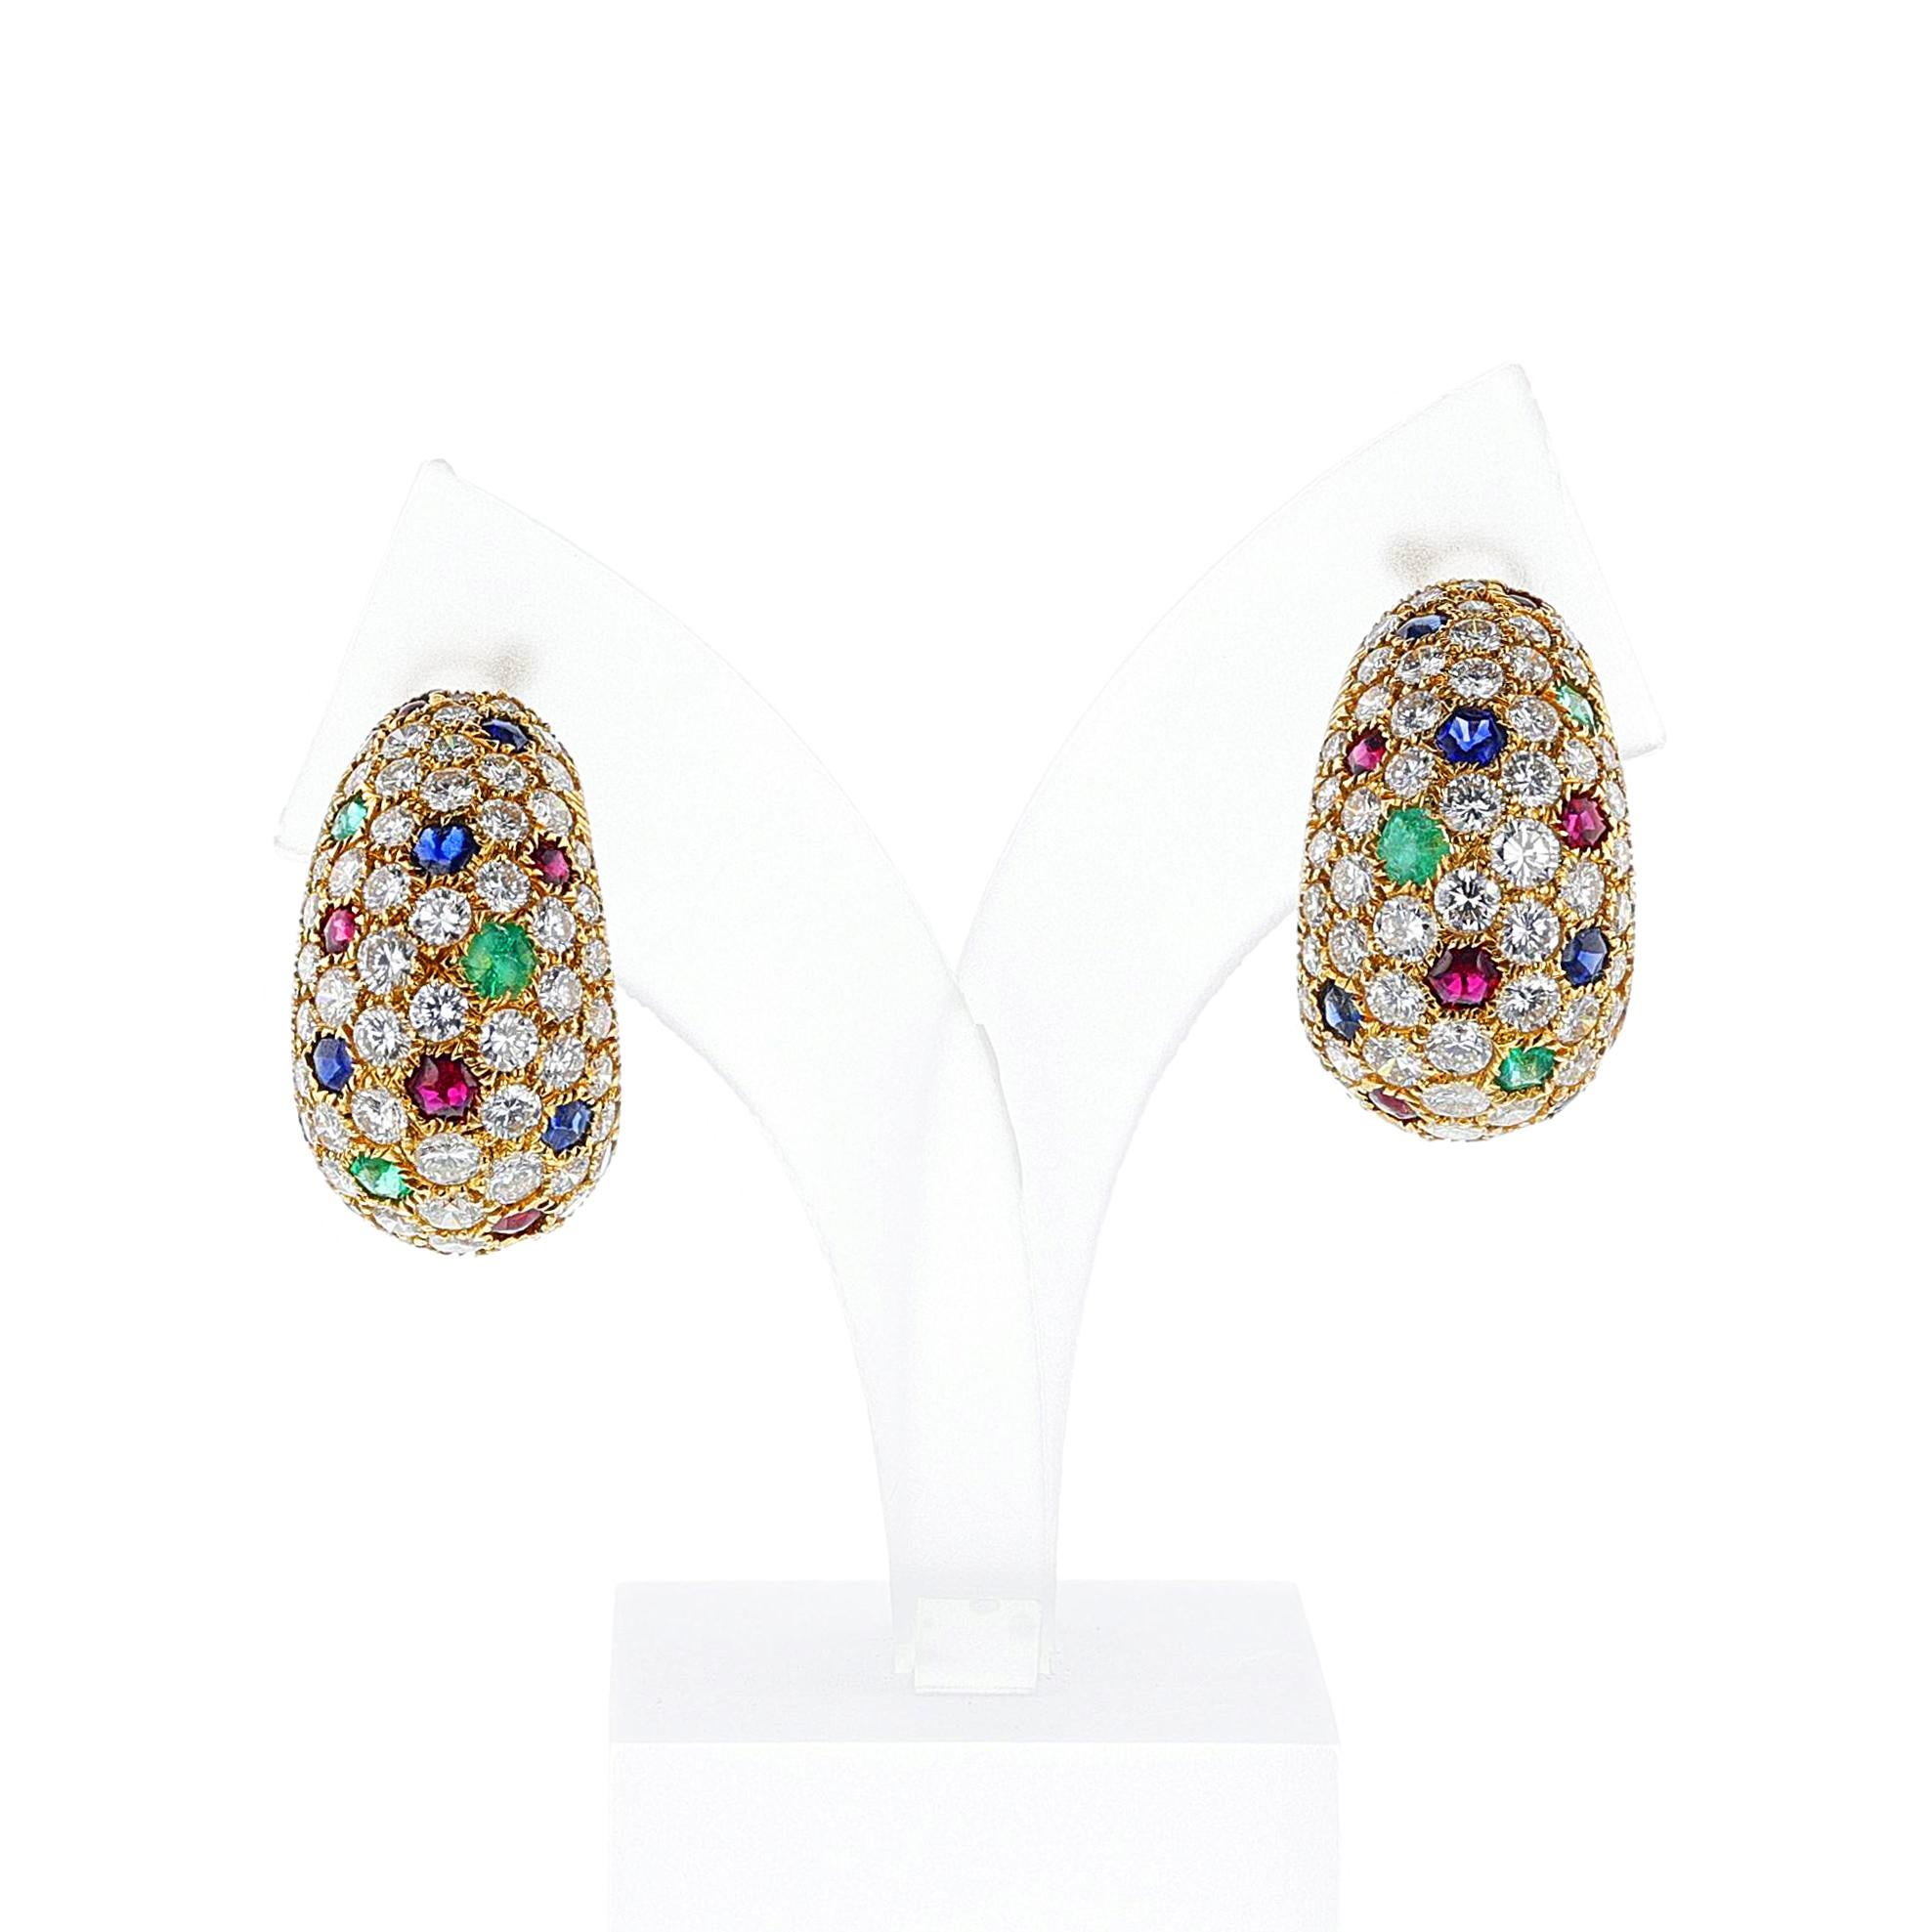 Cartier France Ruby, Emerald, Sapphire & Diamond Gem-Set Half-Hoop Earrings, 18k For Sale 2